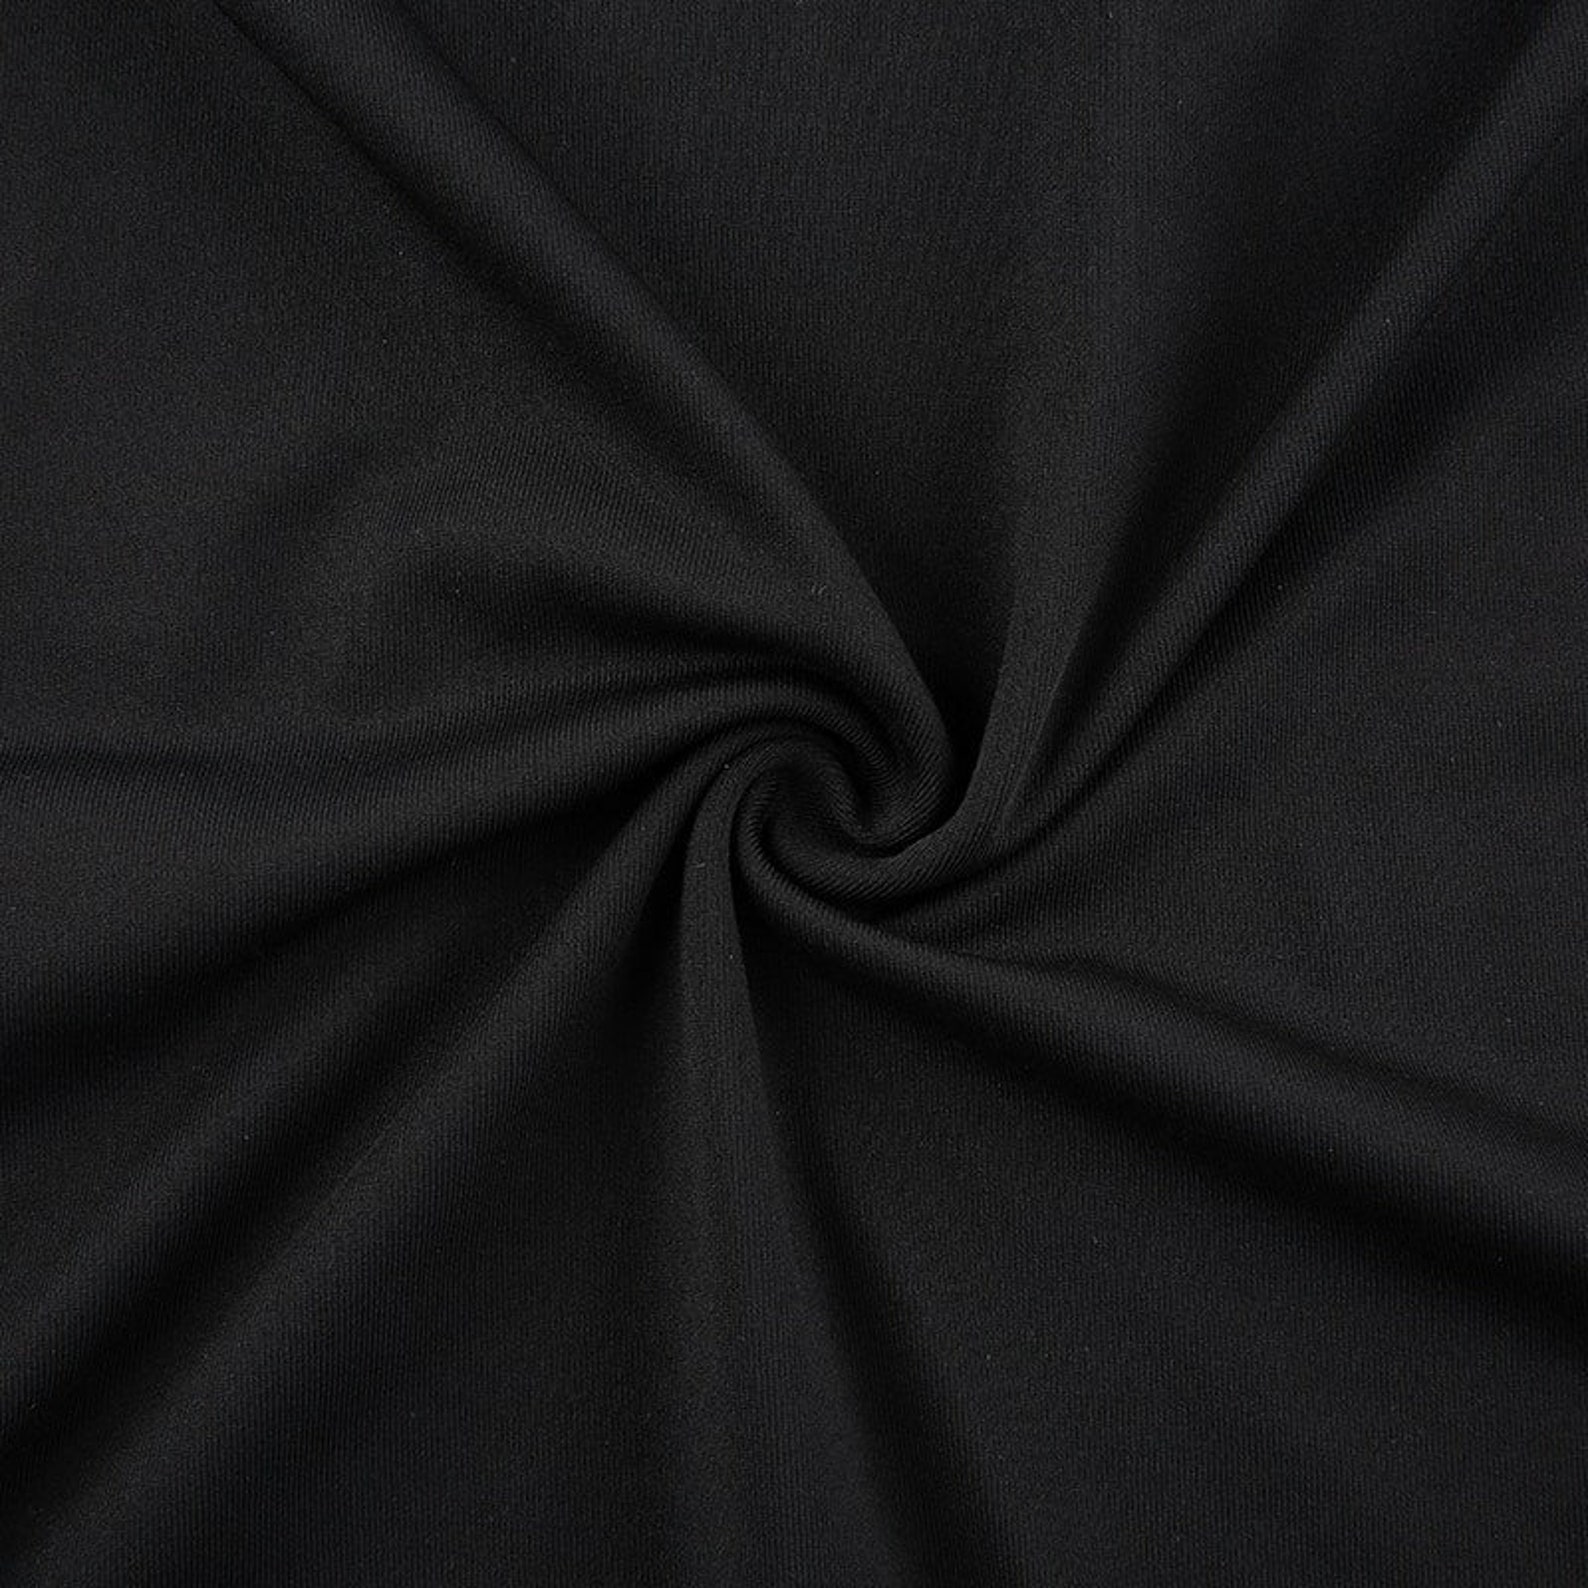 Strappy Black Dress/sexy Black Dress for Women/women Summer - Etsy